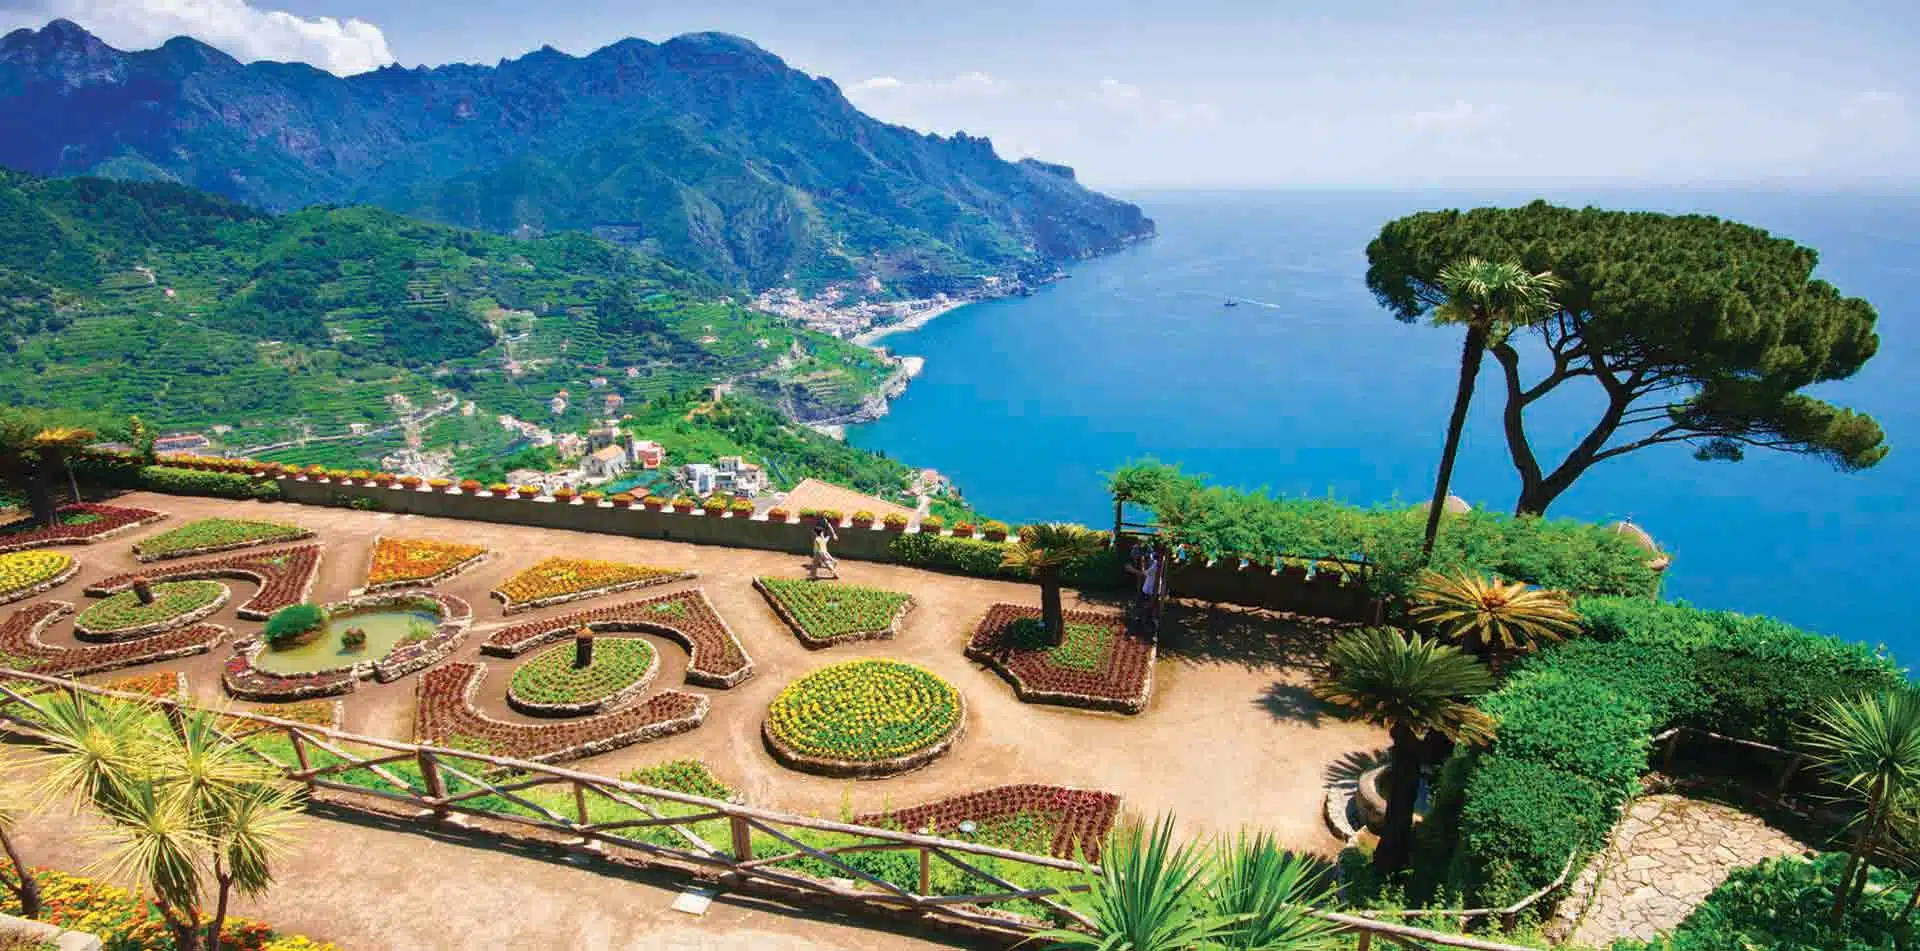 Gardens Overlooking Amalfi Coast, Italy